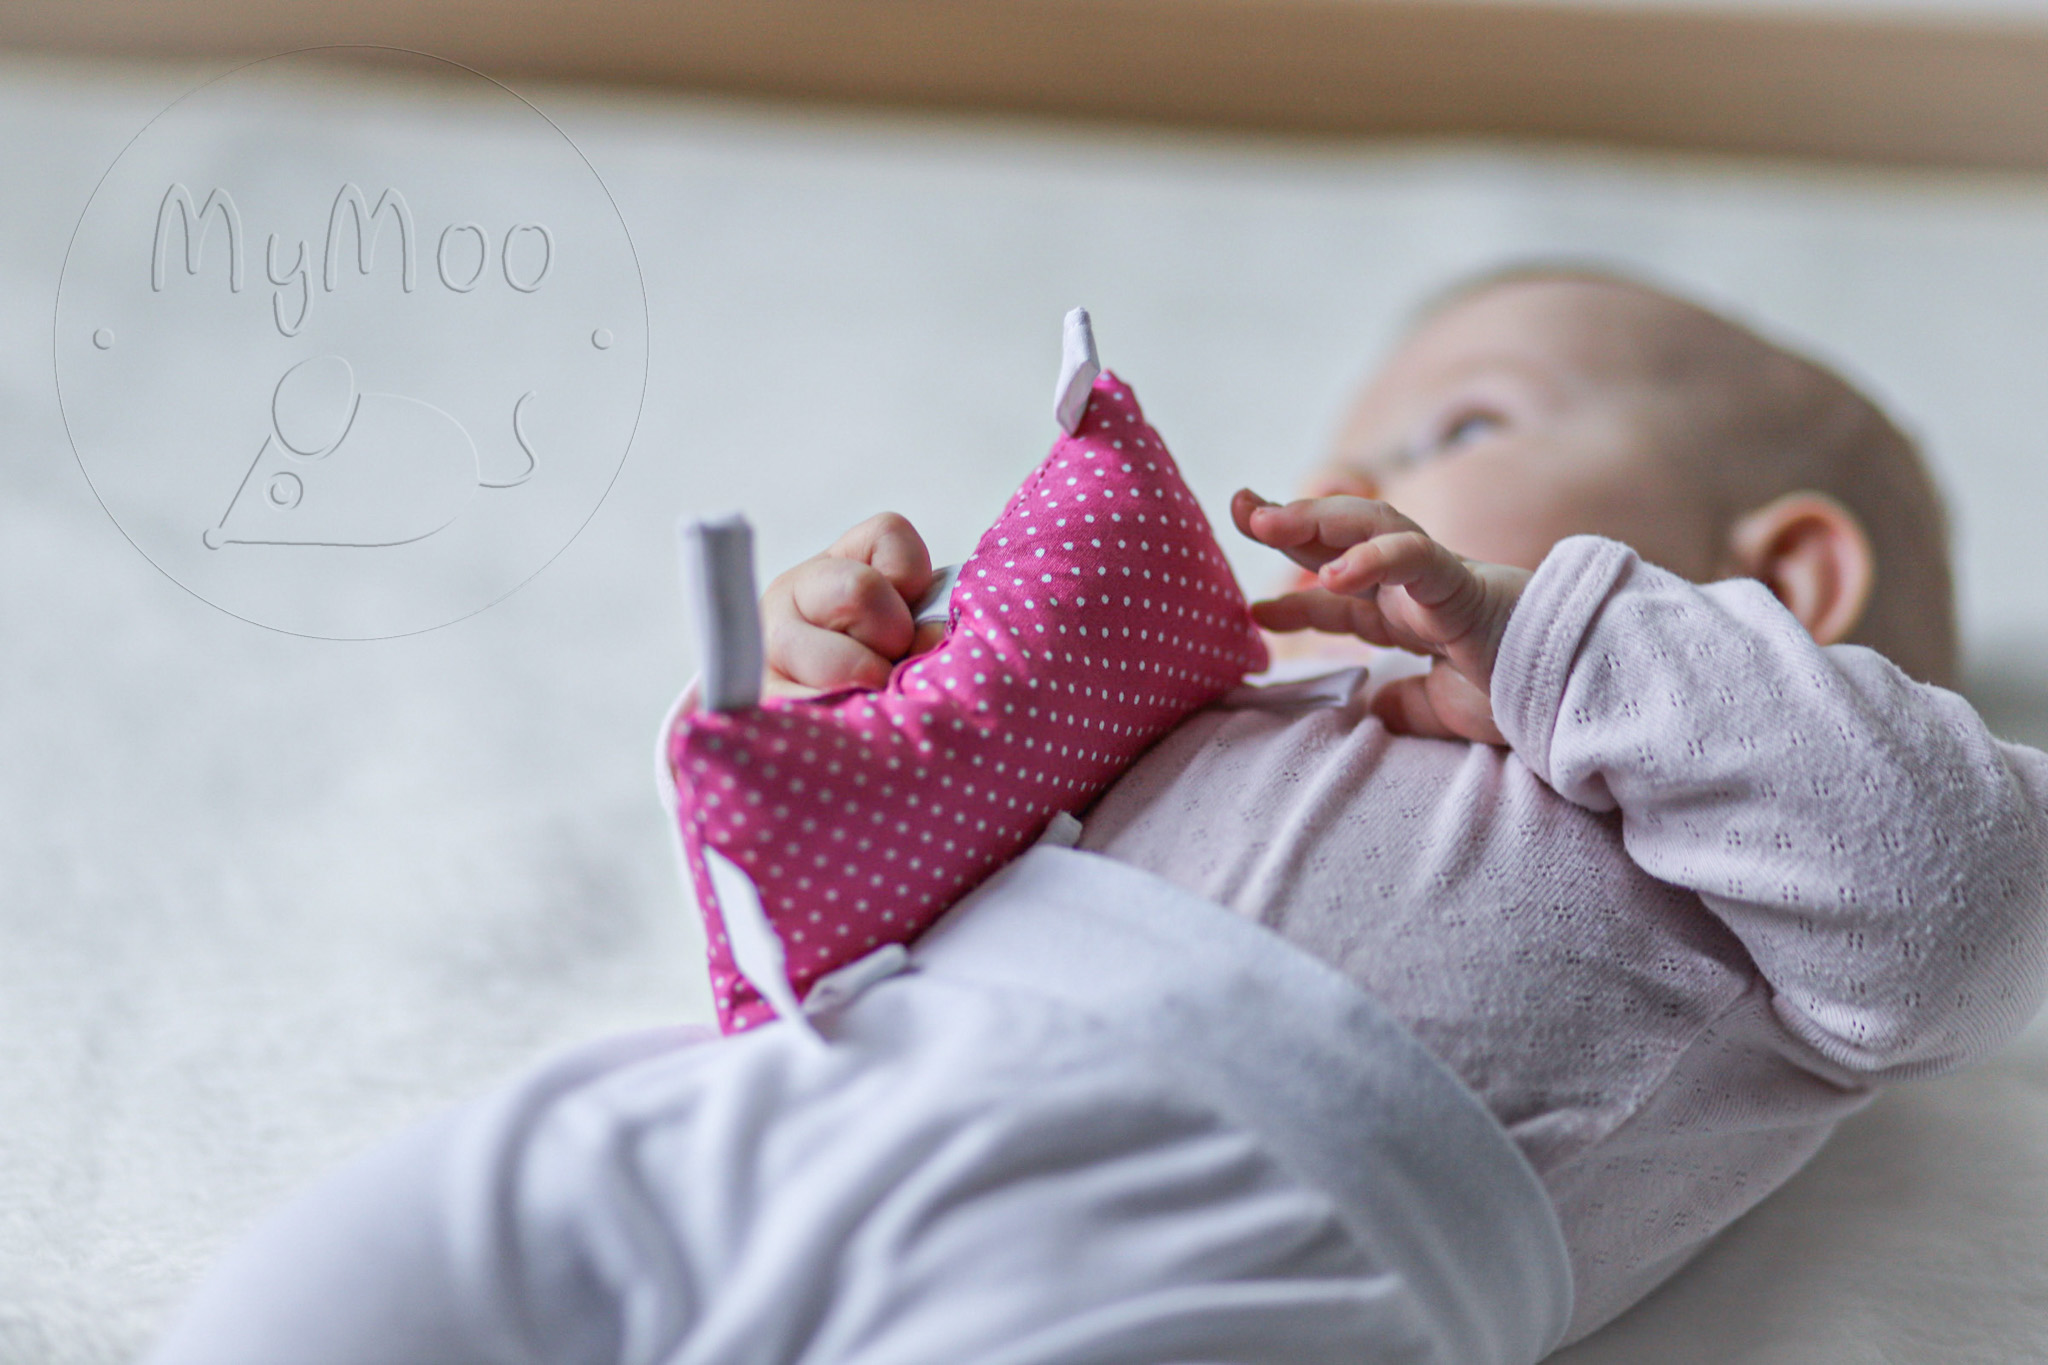 MyMoo Montessori Gripping Pillow - Pink/Polka Dots,MyMoo Montessori Gripping Pillow - Pink/Polka Dots